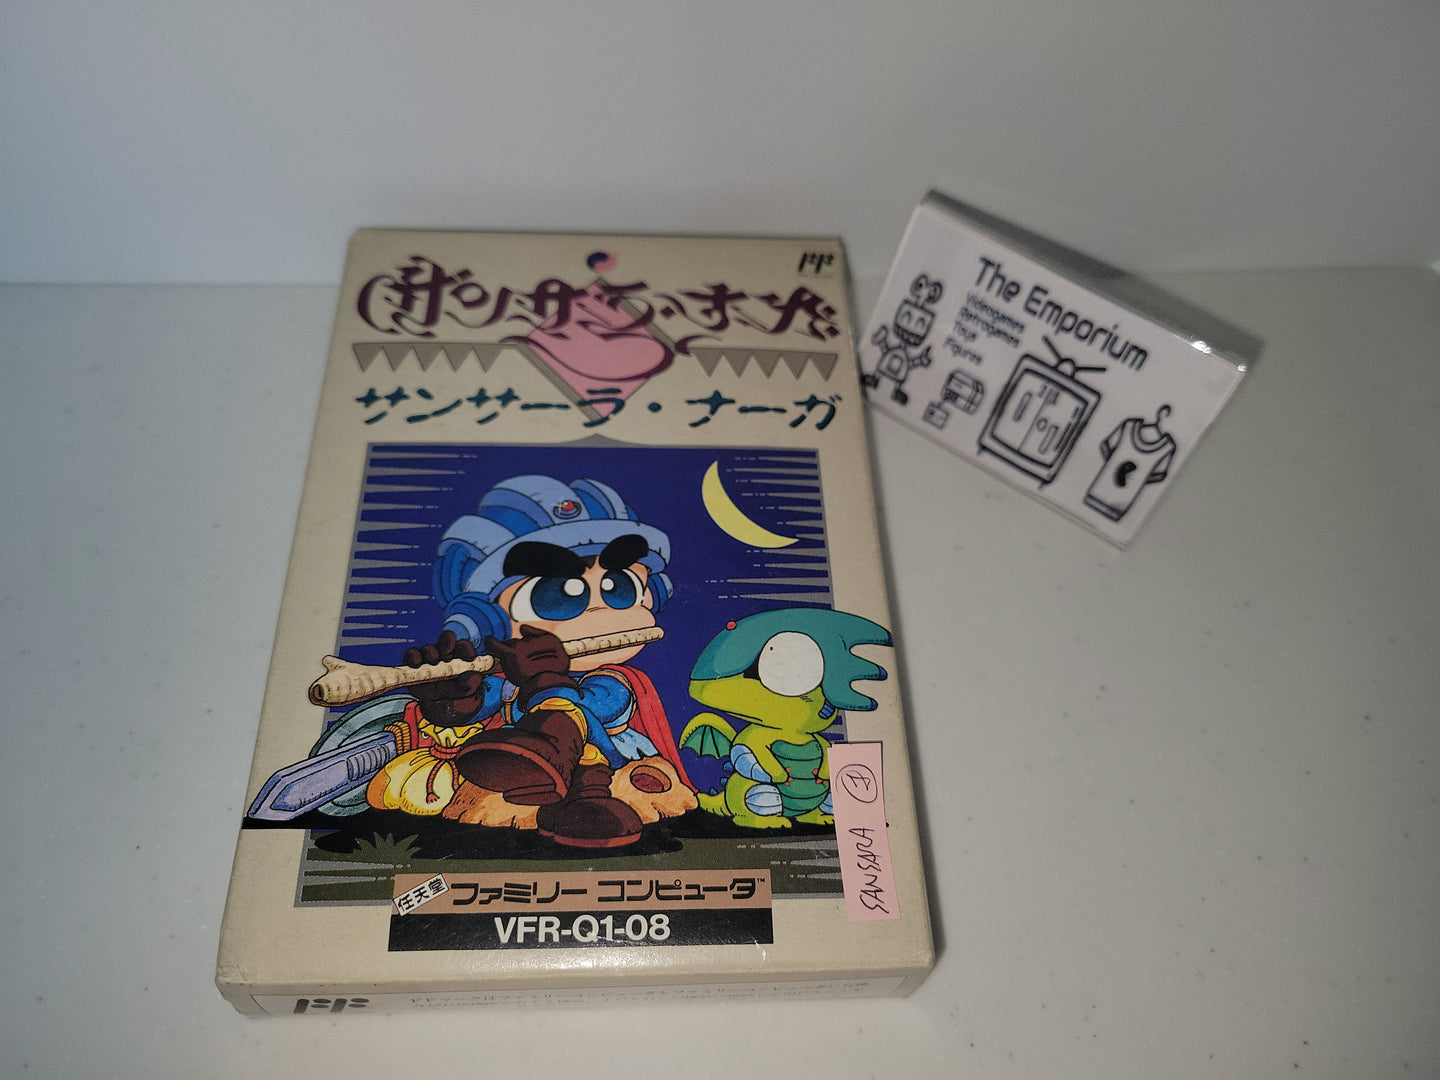 Sansara Naga - Nintendo Fc Famicom